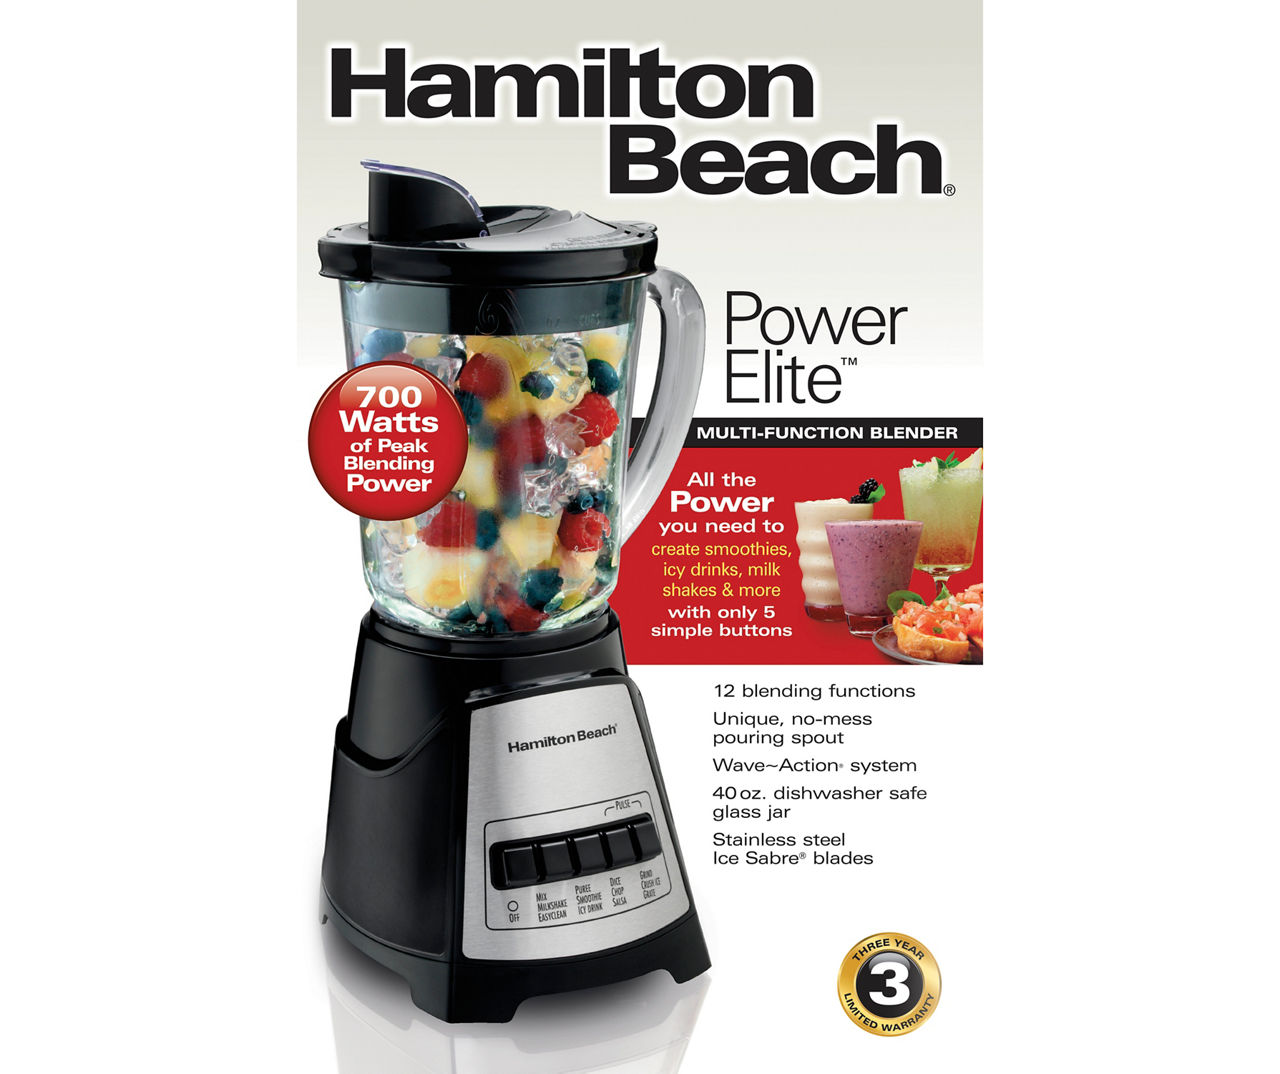 Hamilton Beach Power Elite® Multi-Function Blender with Mess-free